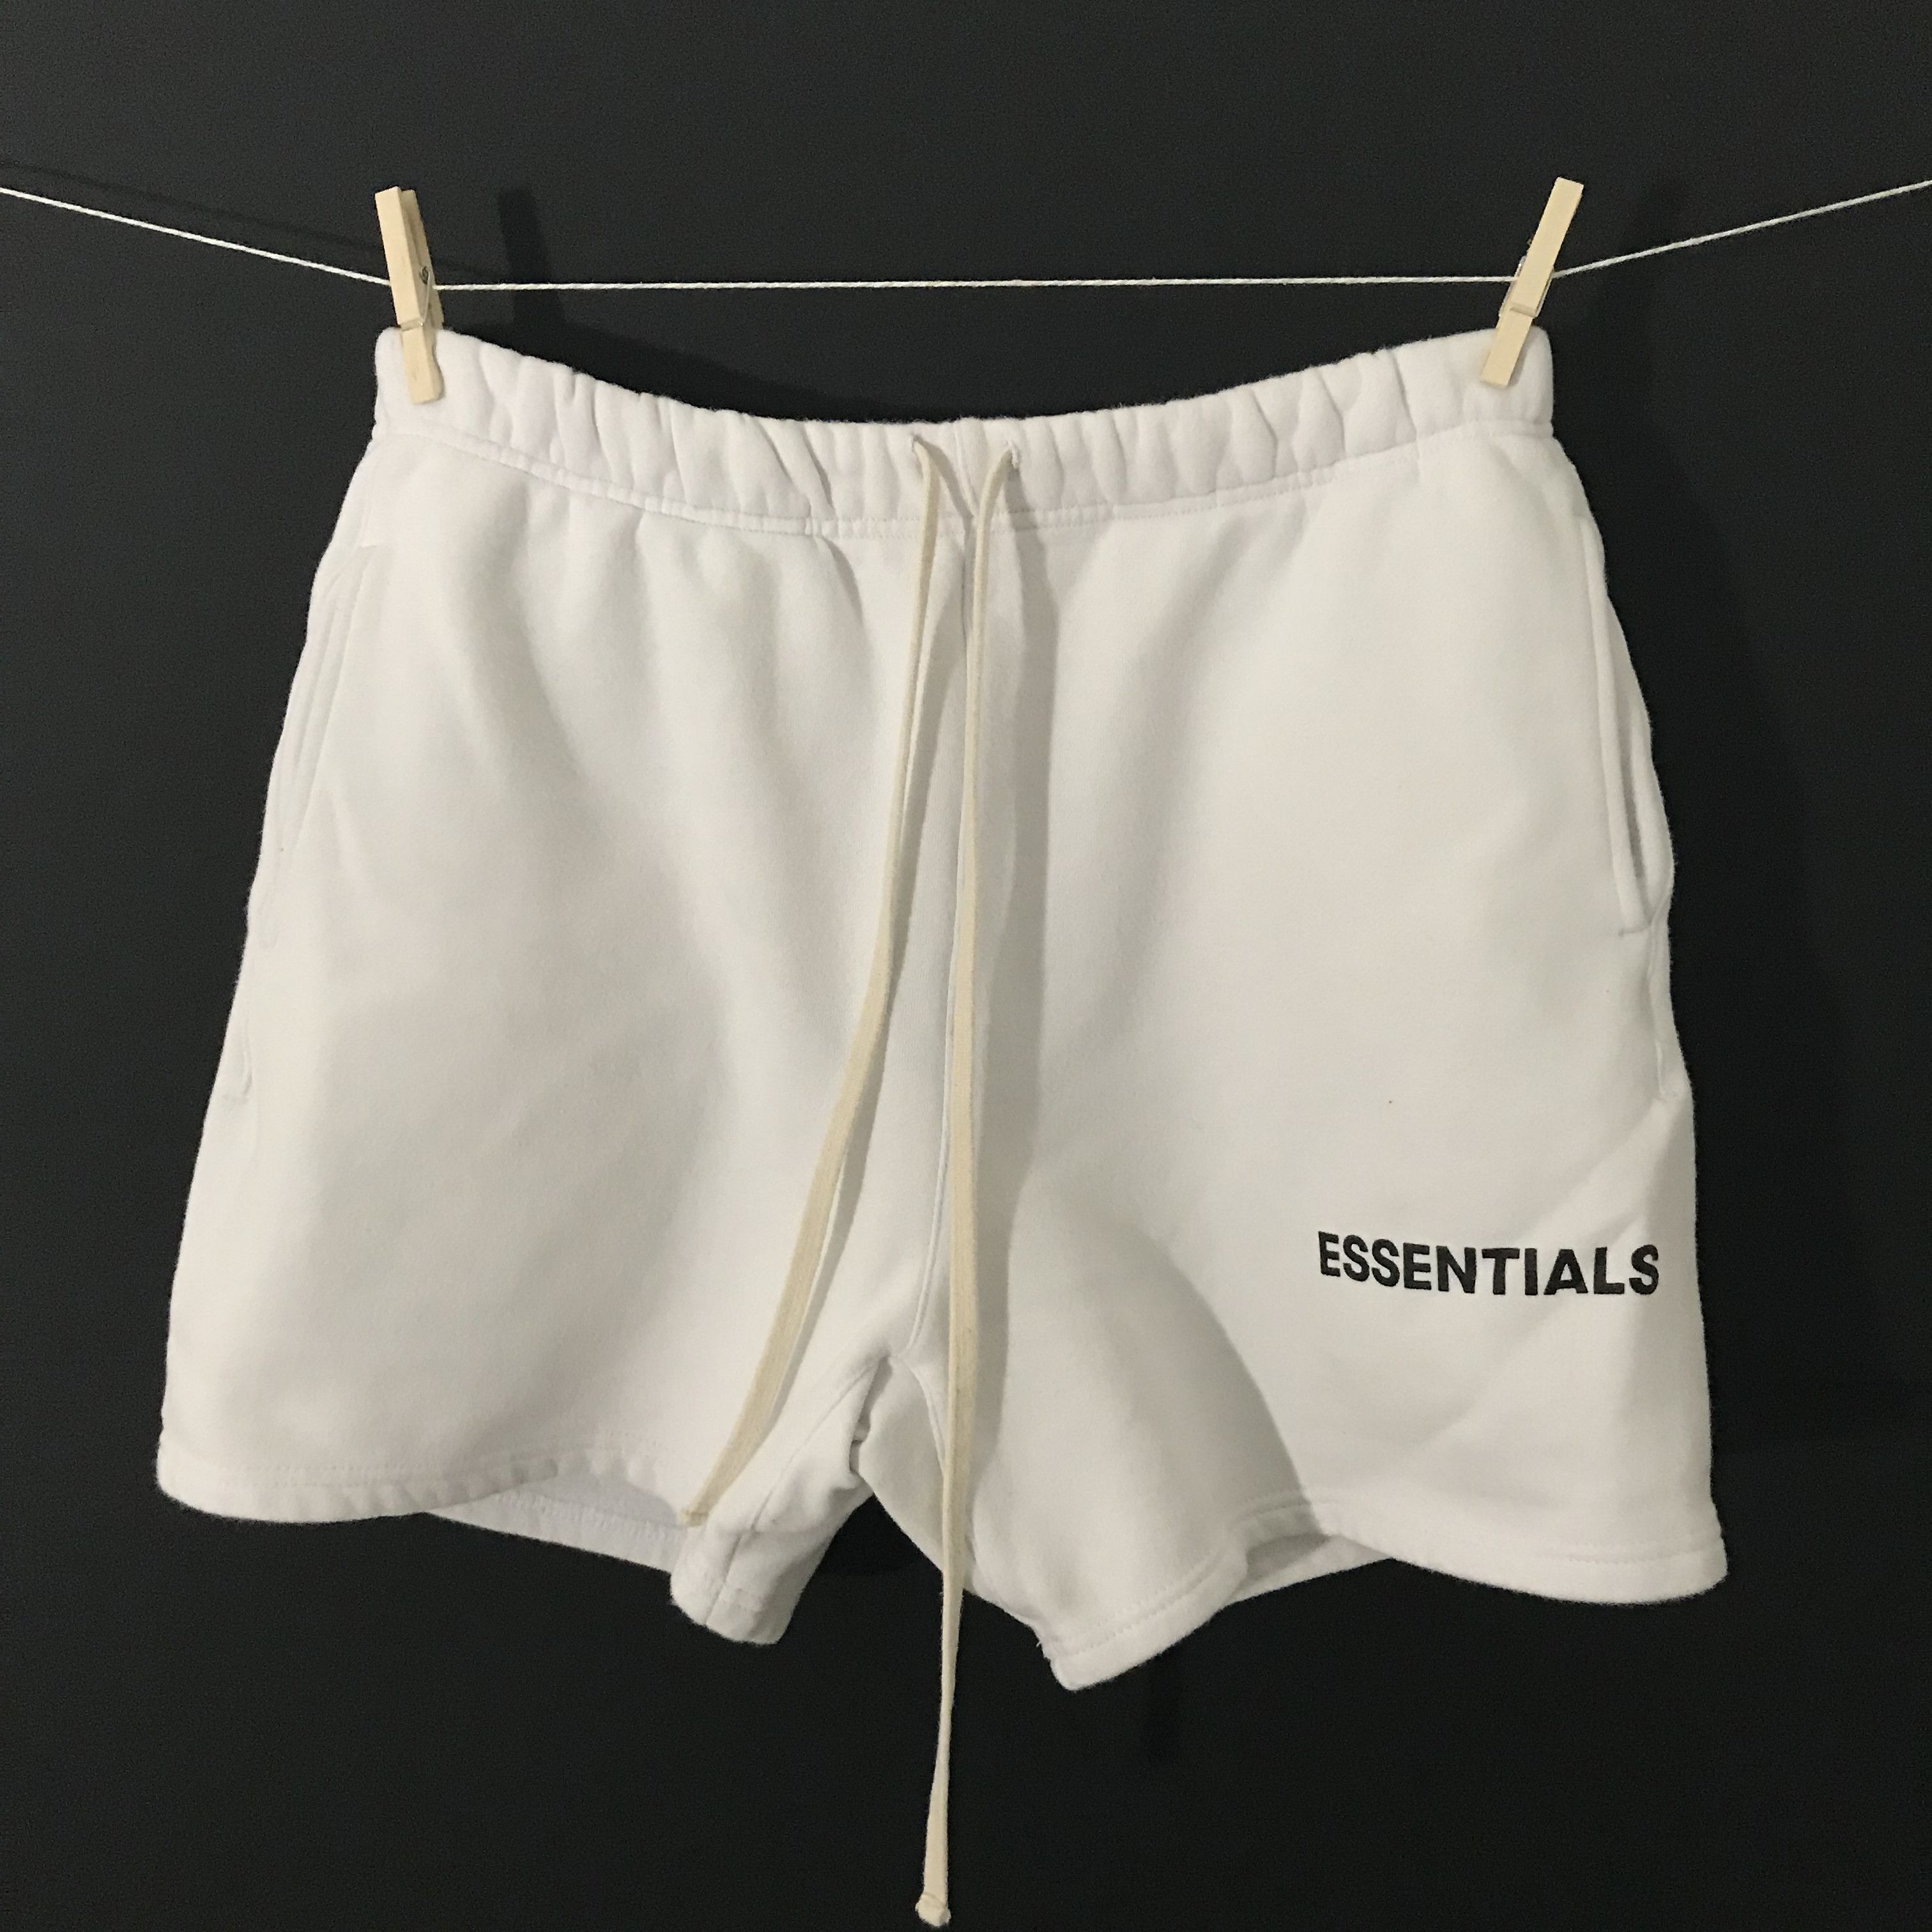 Pacsun ESSENTIALS White Graphic Sweat Shorts Size US 32 / EU 48 - 1 Preview